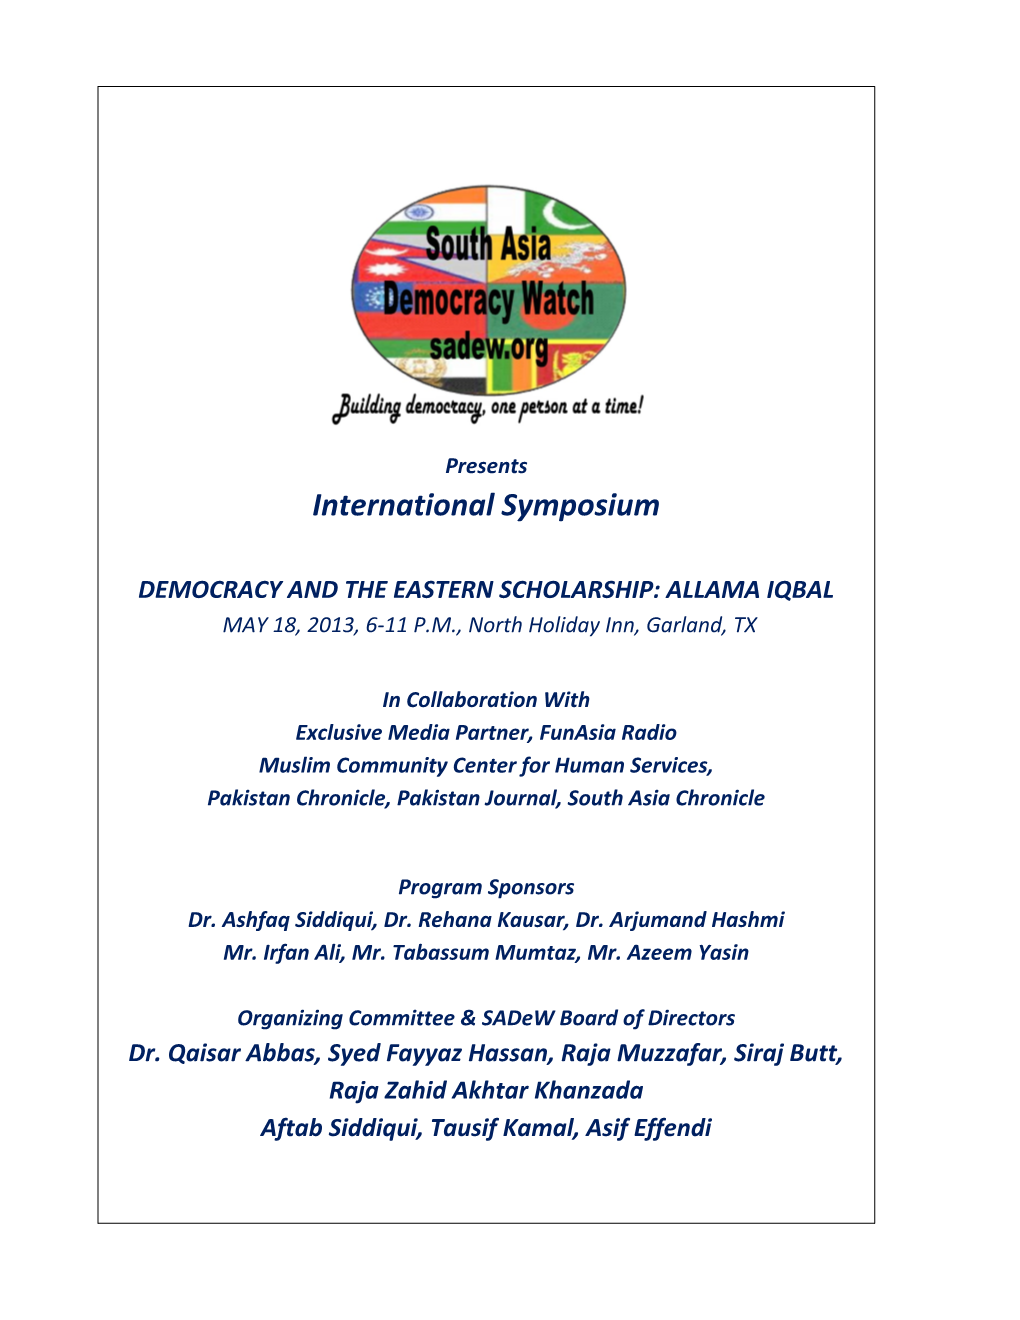 International Symposium